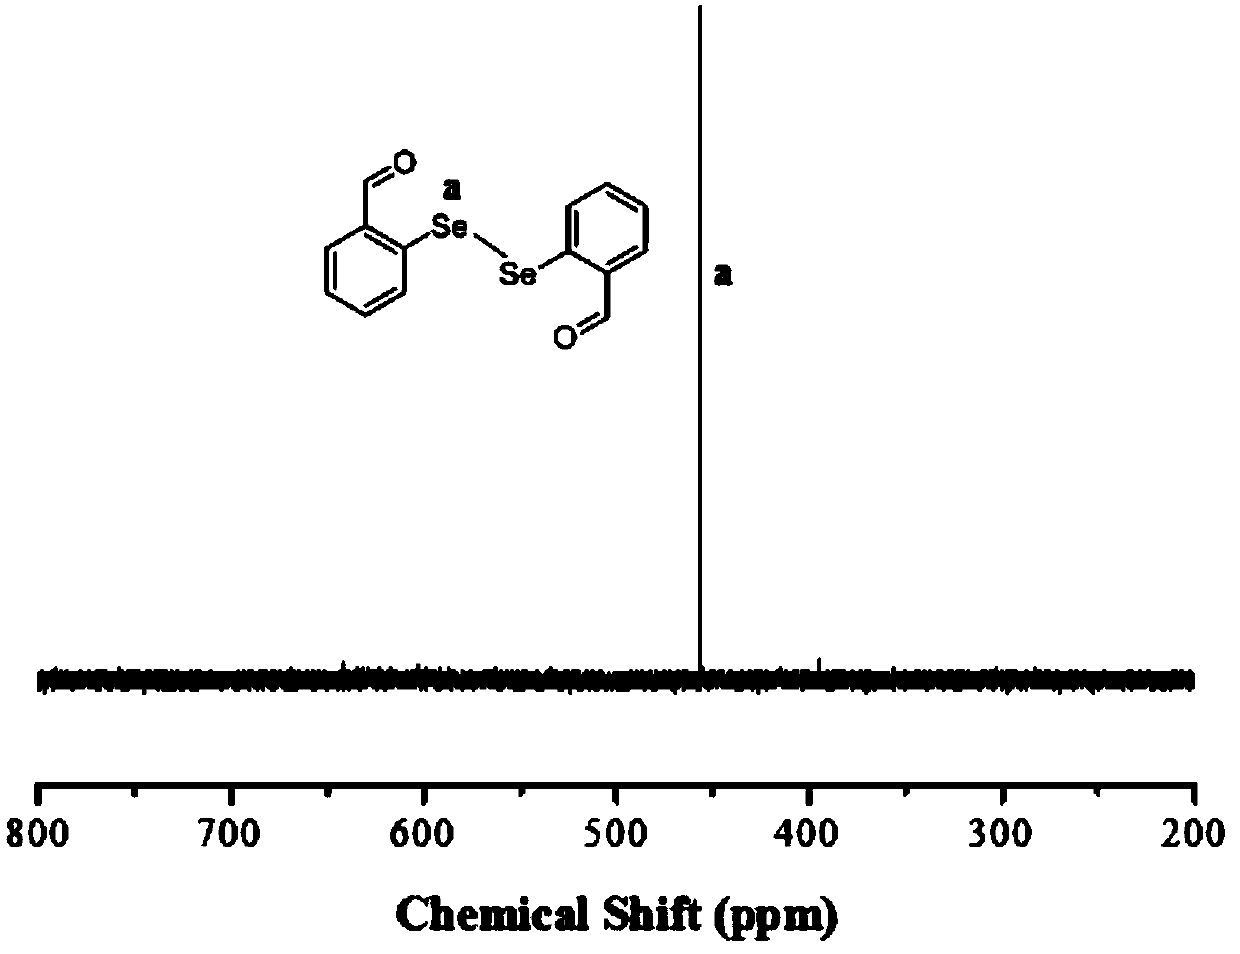 Selenium-containing macromolecular fluorescent probe and preparation method thereof